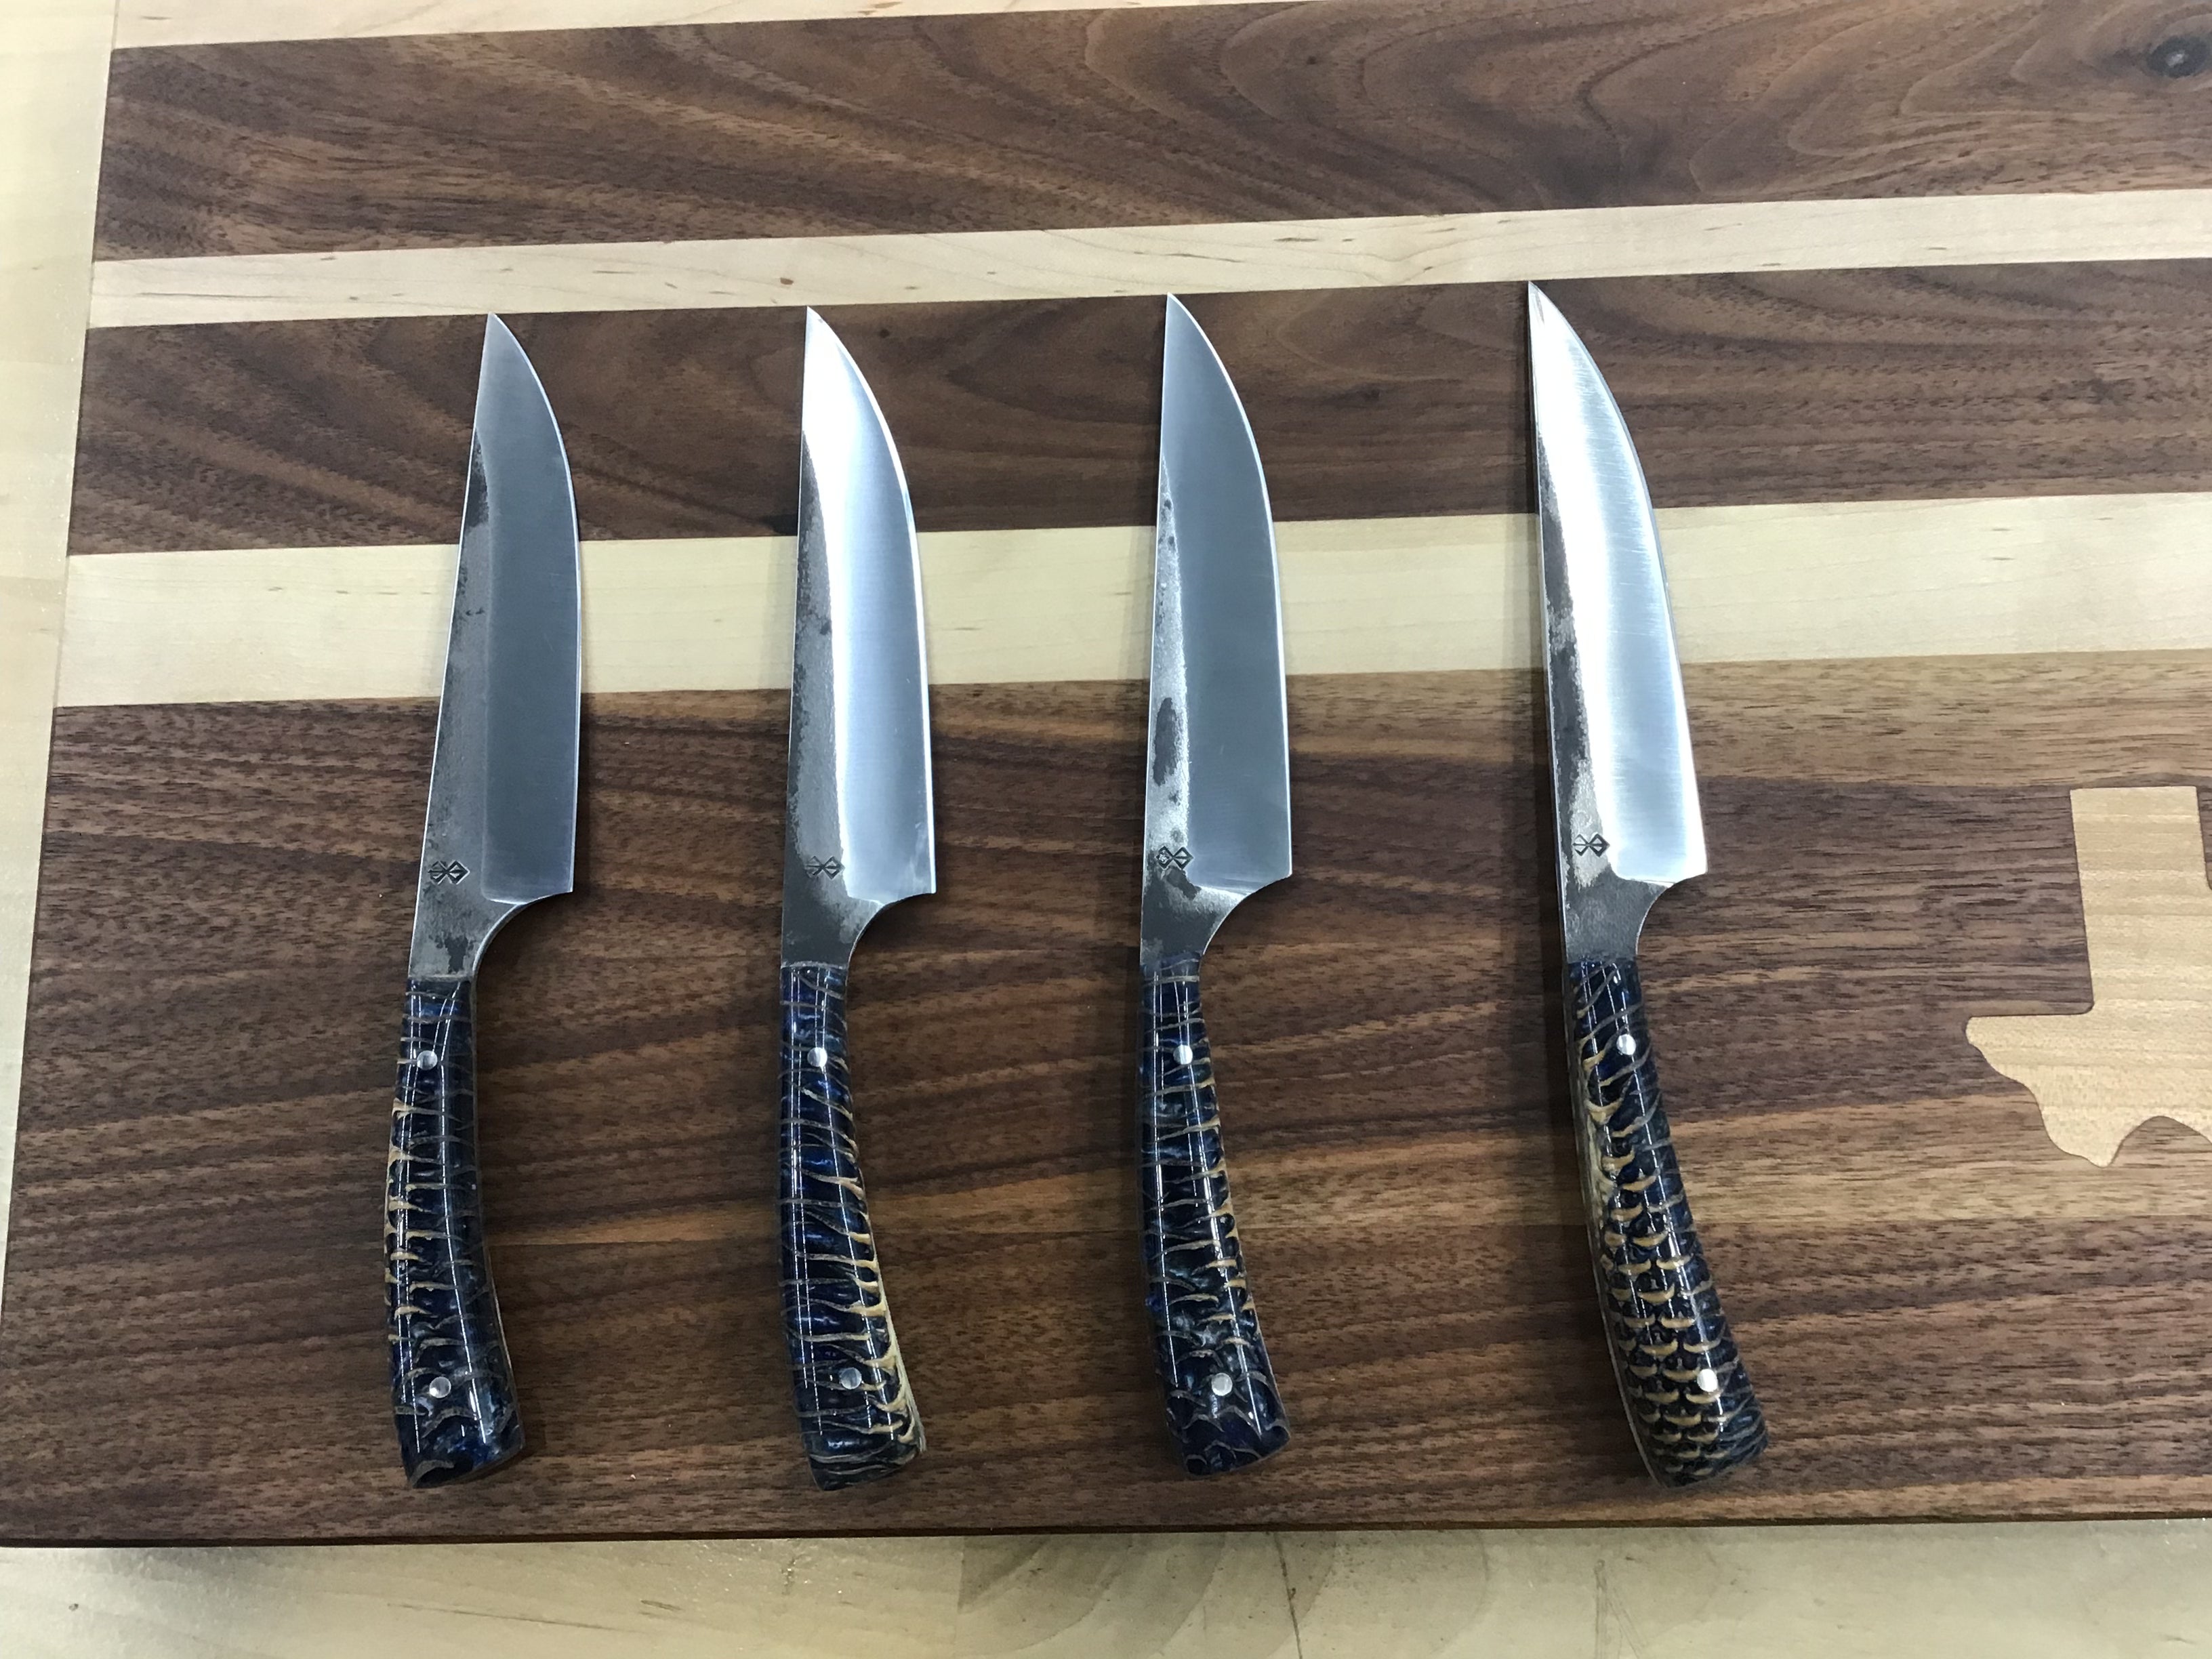 Pine-cone Steak Knife Set